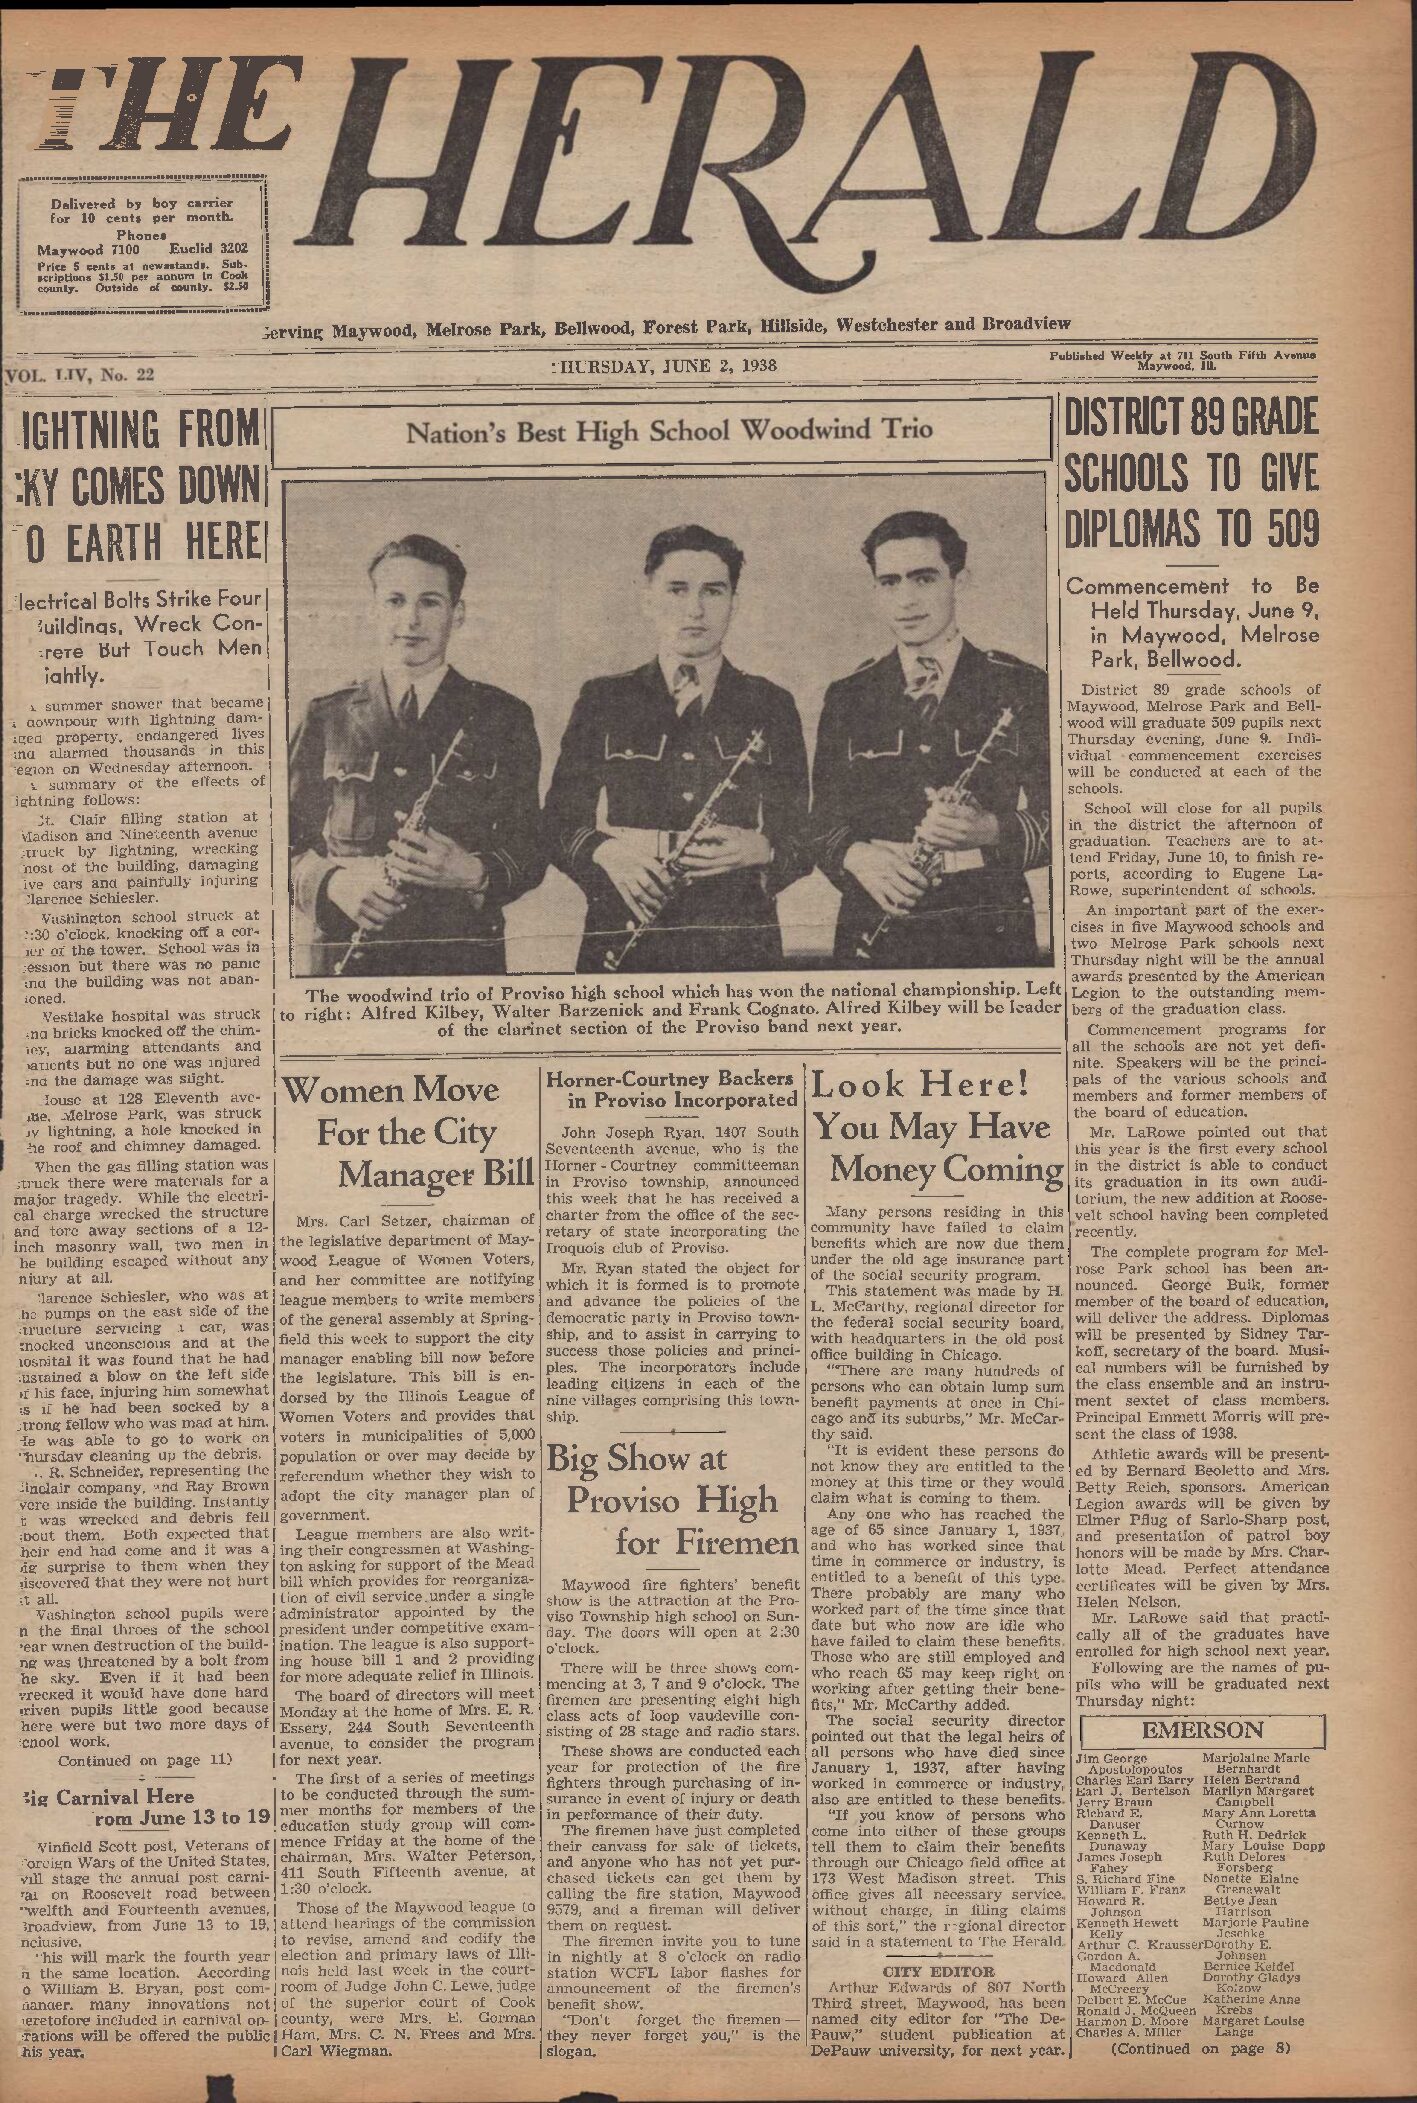 The Herald – 19380602